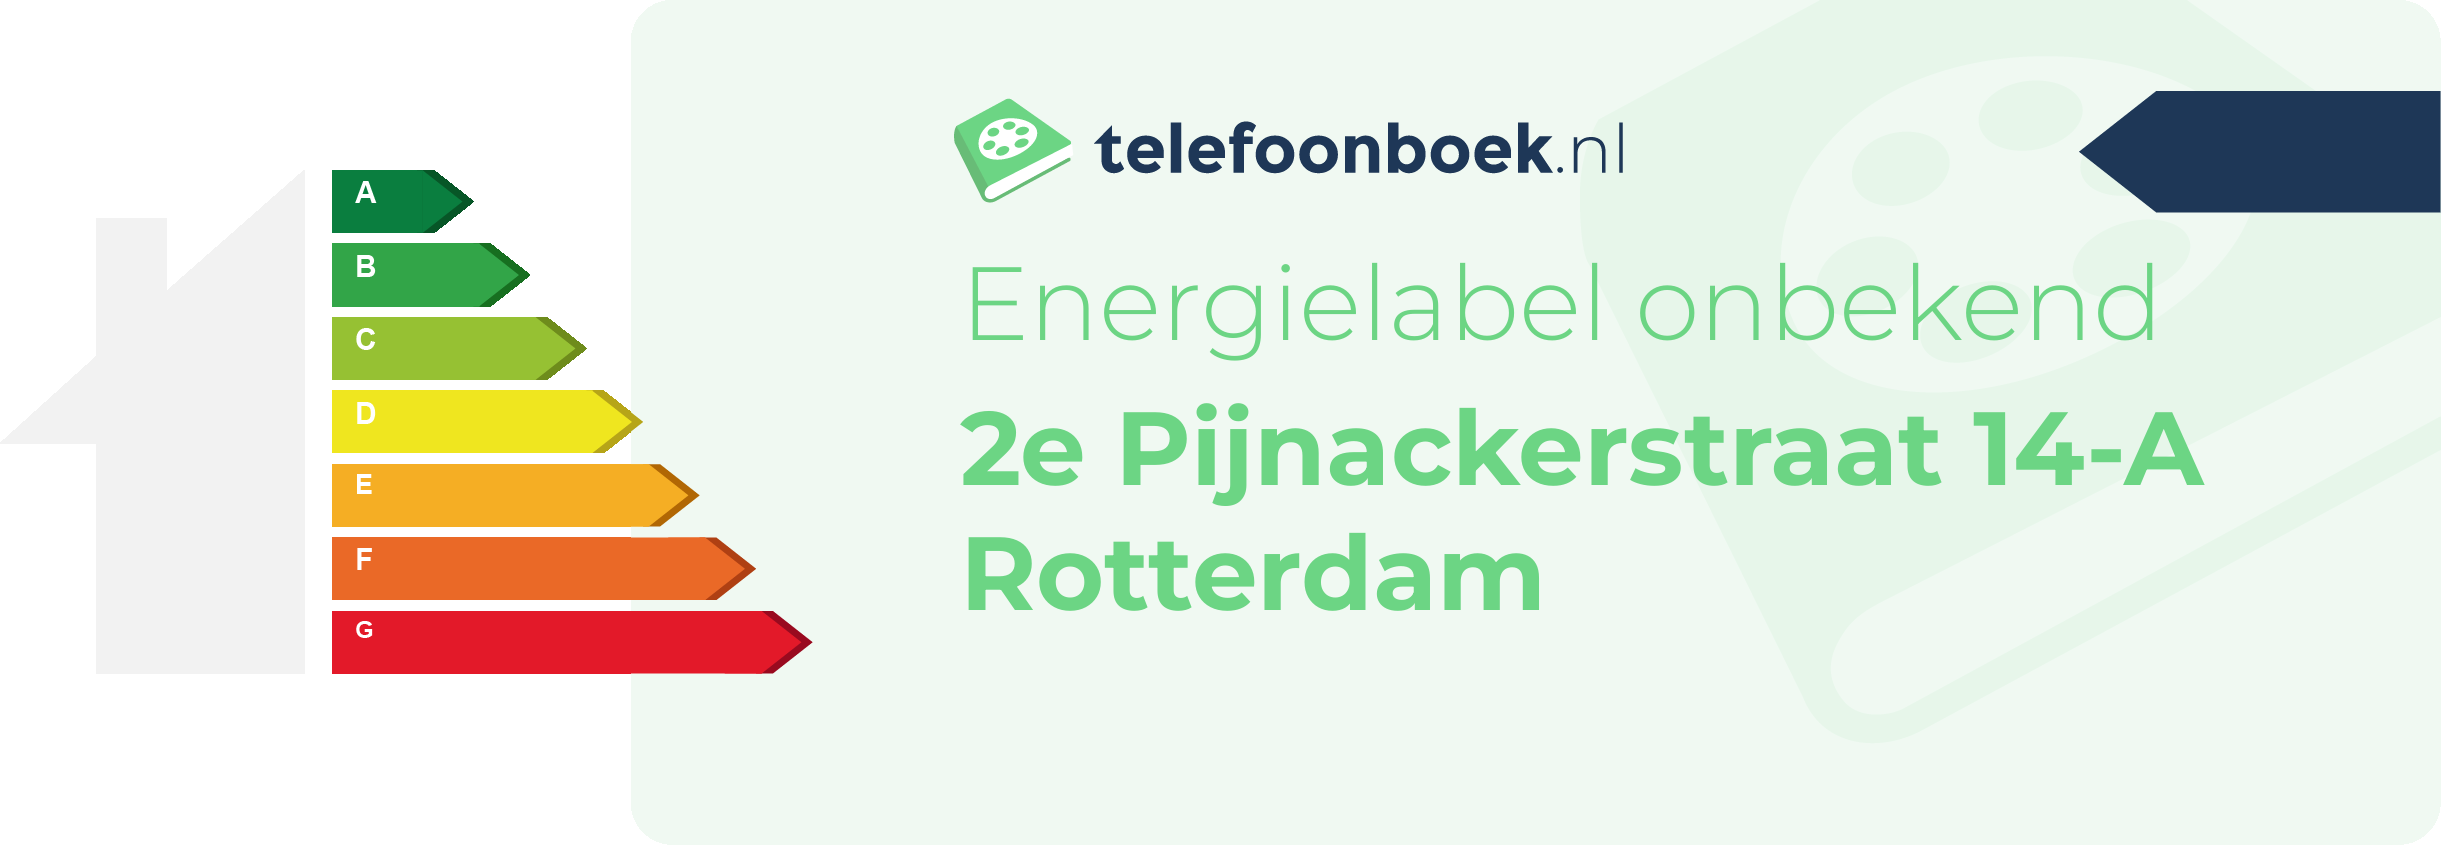 Energielabel 2e Pijnackerstraat 14-A Rotterdam